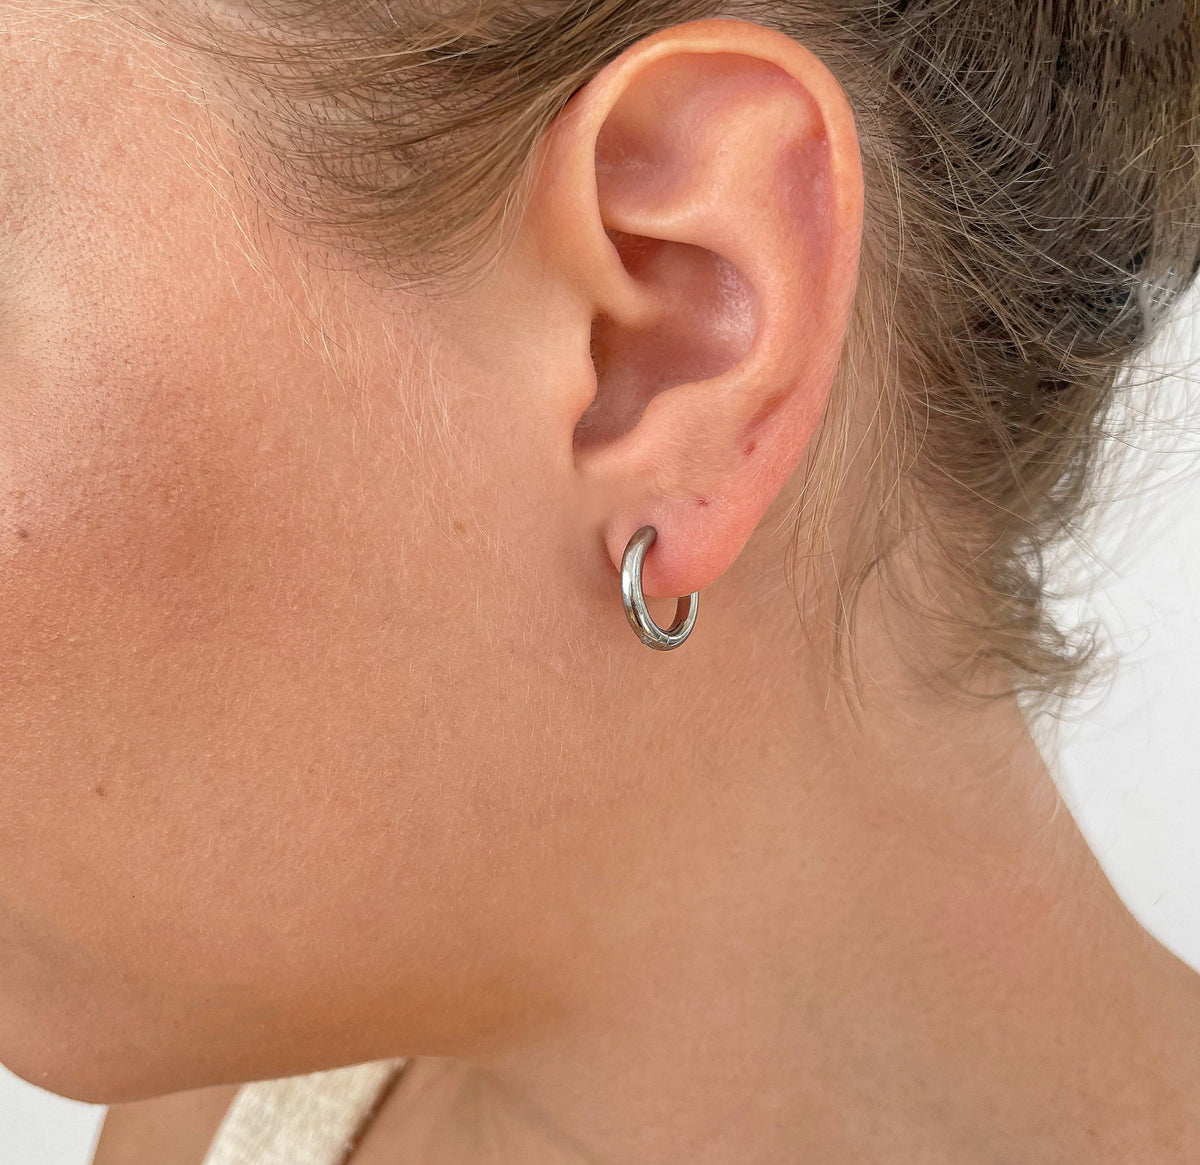 silver huggie hoops earring waterproof jewelry